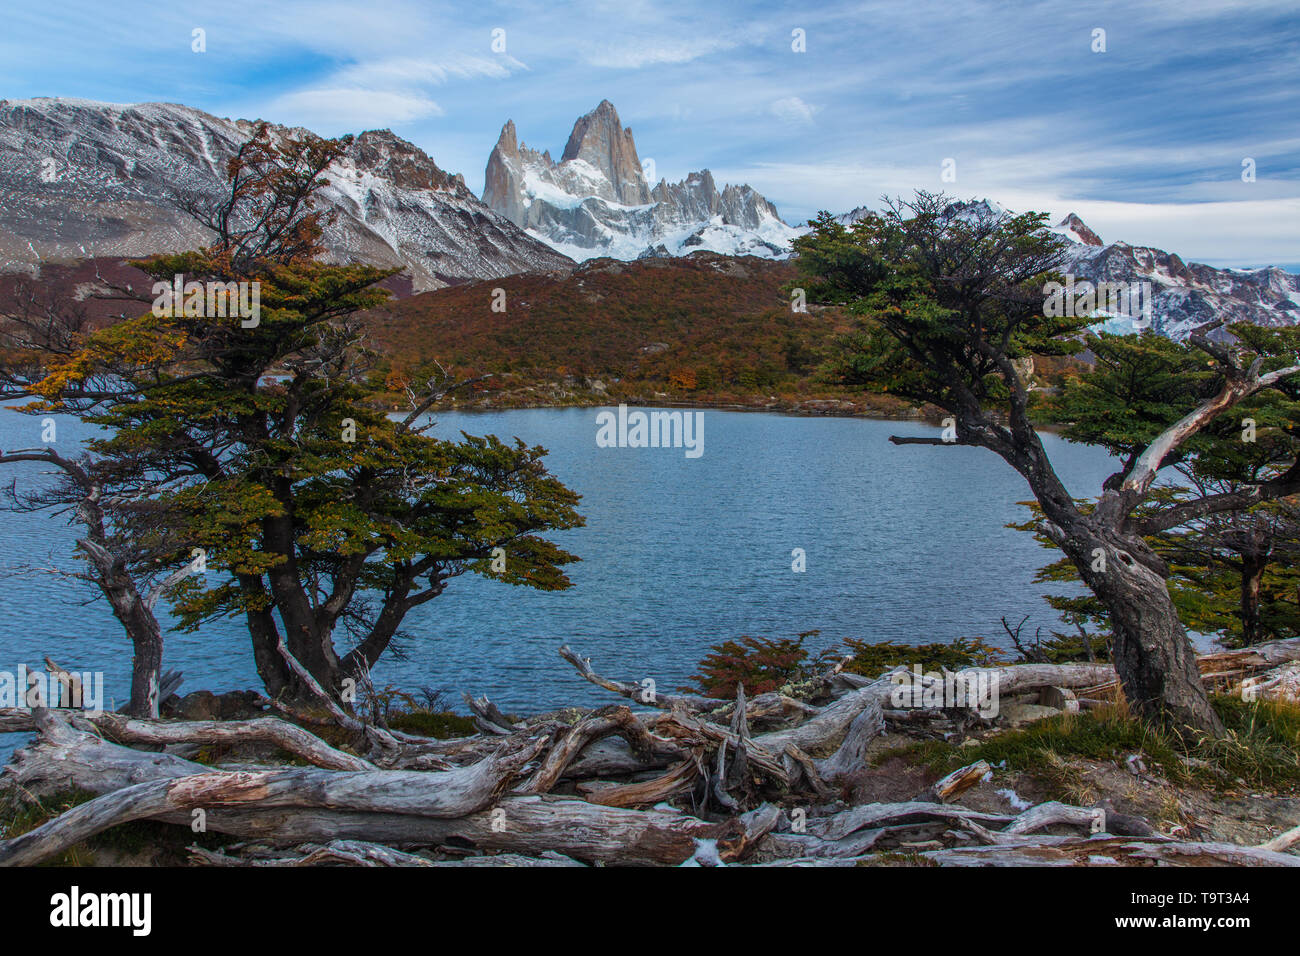 Lago Capri in Los Glaciares National Park near El Chalten, Argentina.  A UNESCO World Heritage Site in the Patagonia region of South America.  The lak Stock Photo